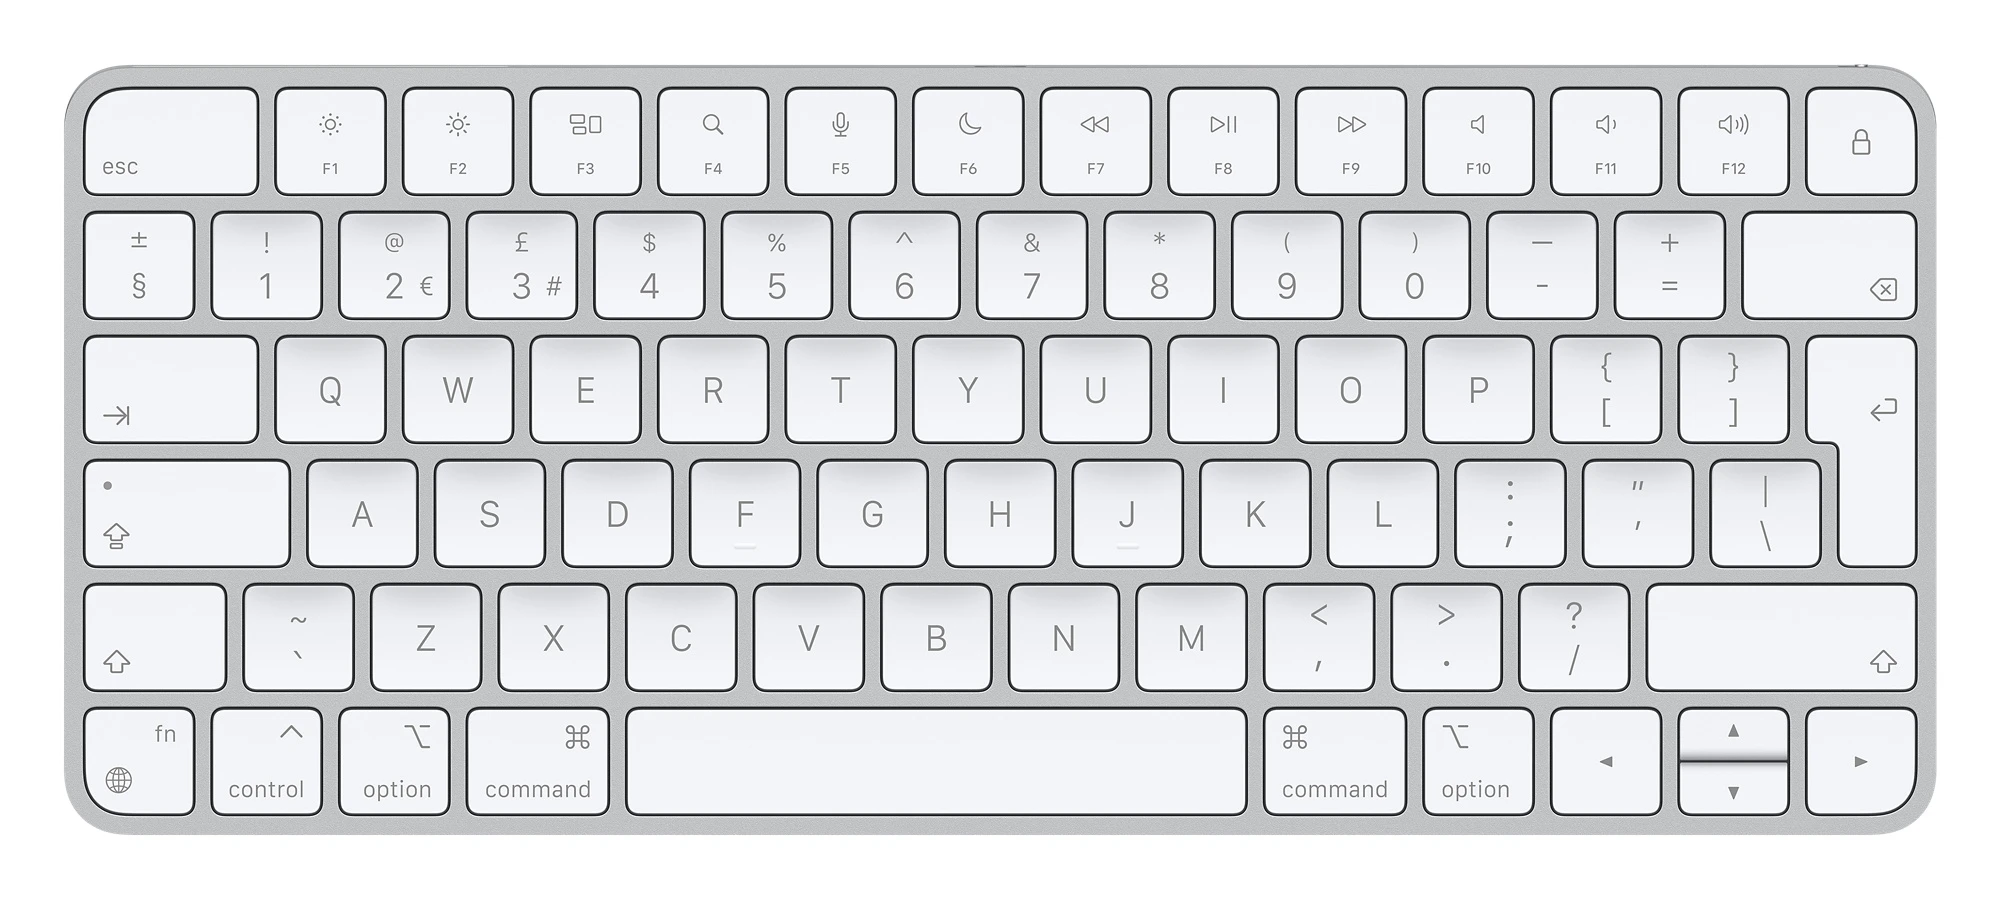 keyboard with EU layout